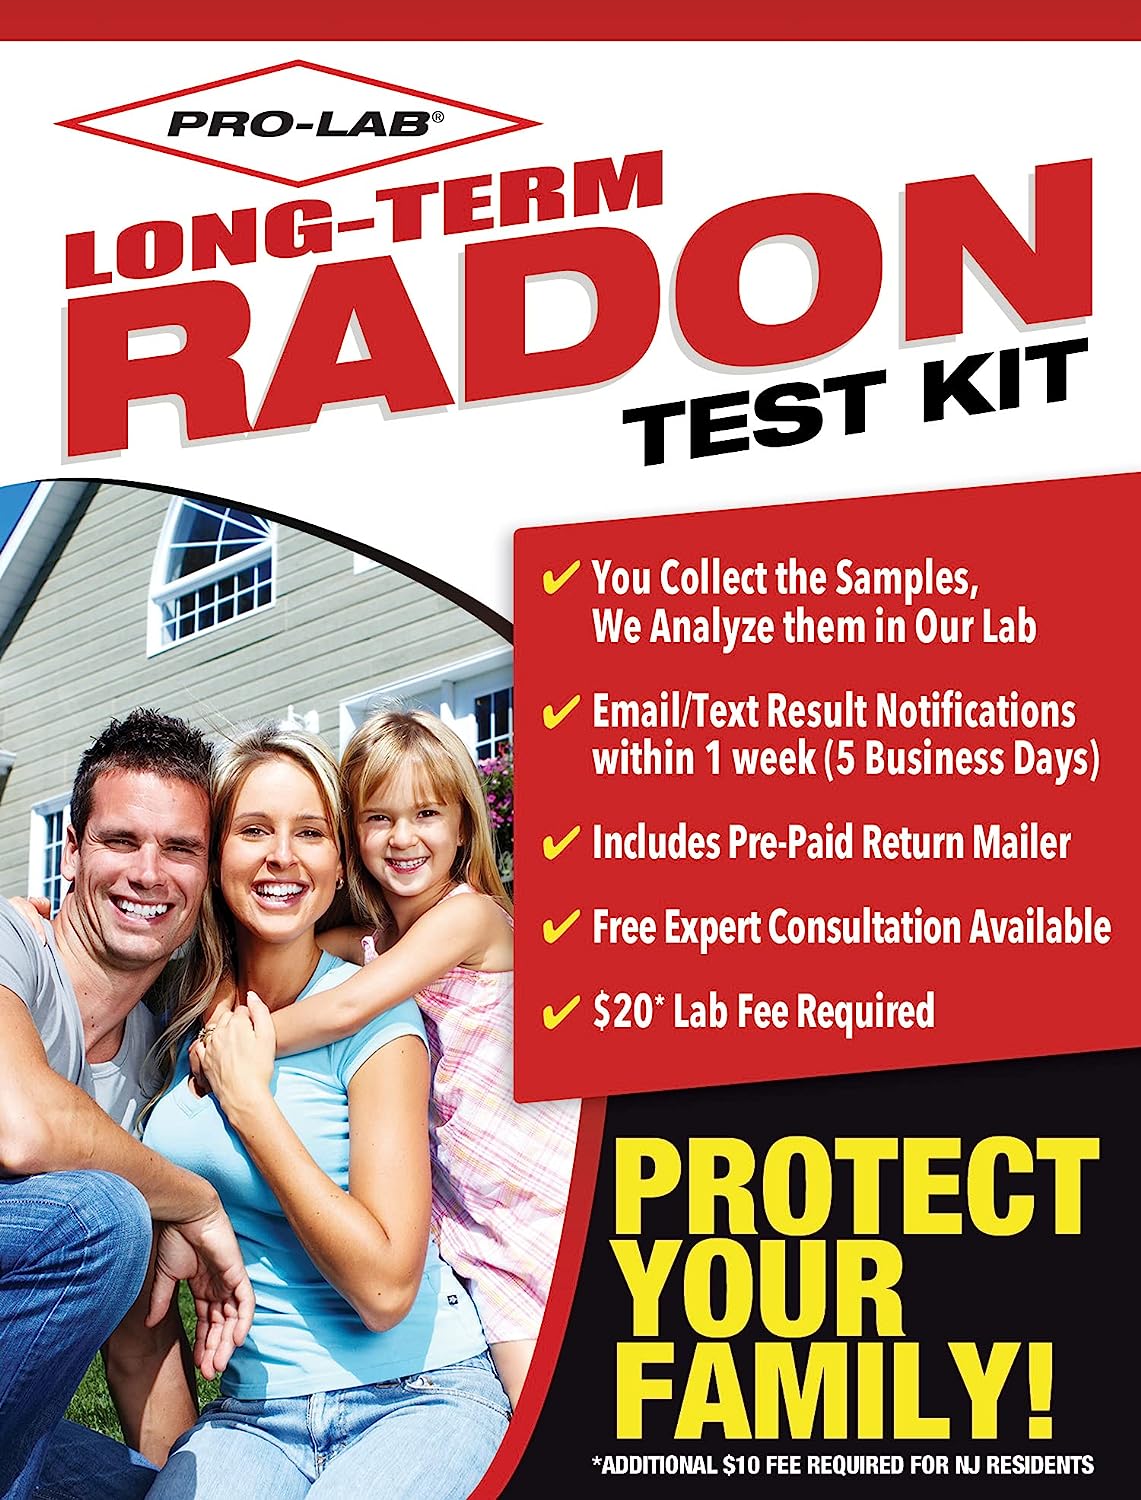 PRO-LAB Long Term Radon Test Kit - The PRO-LAB Long [...]